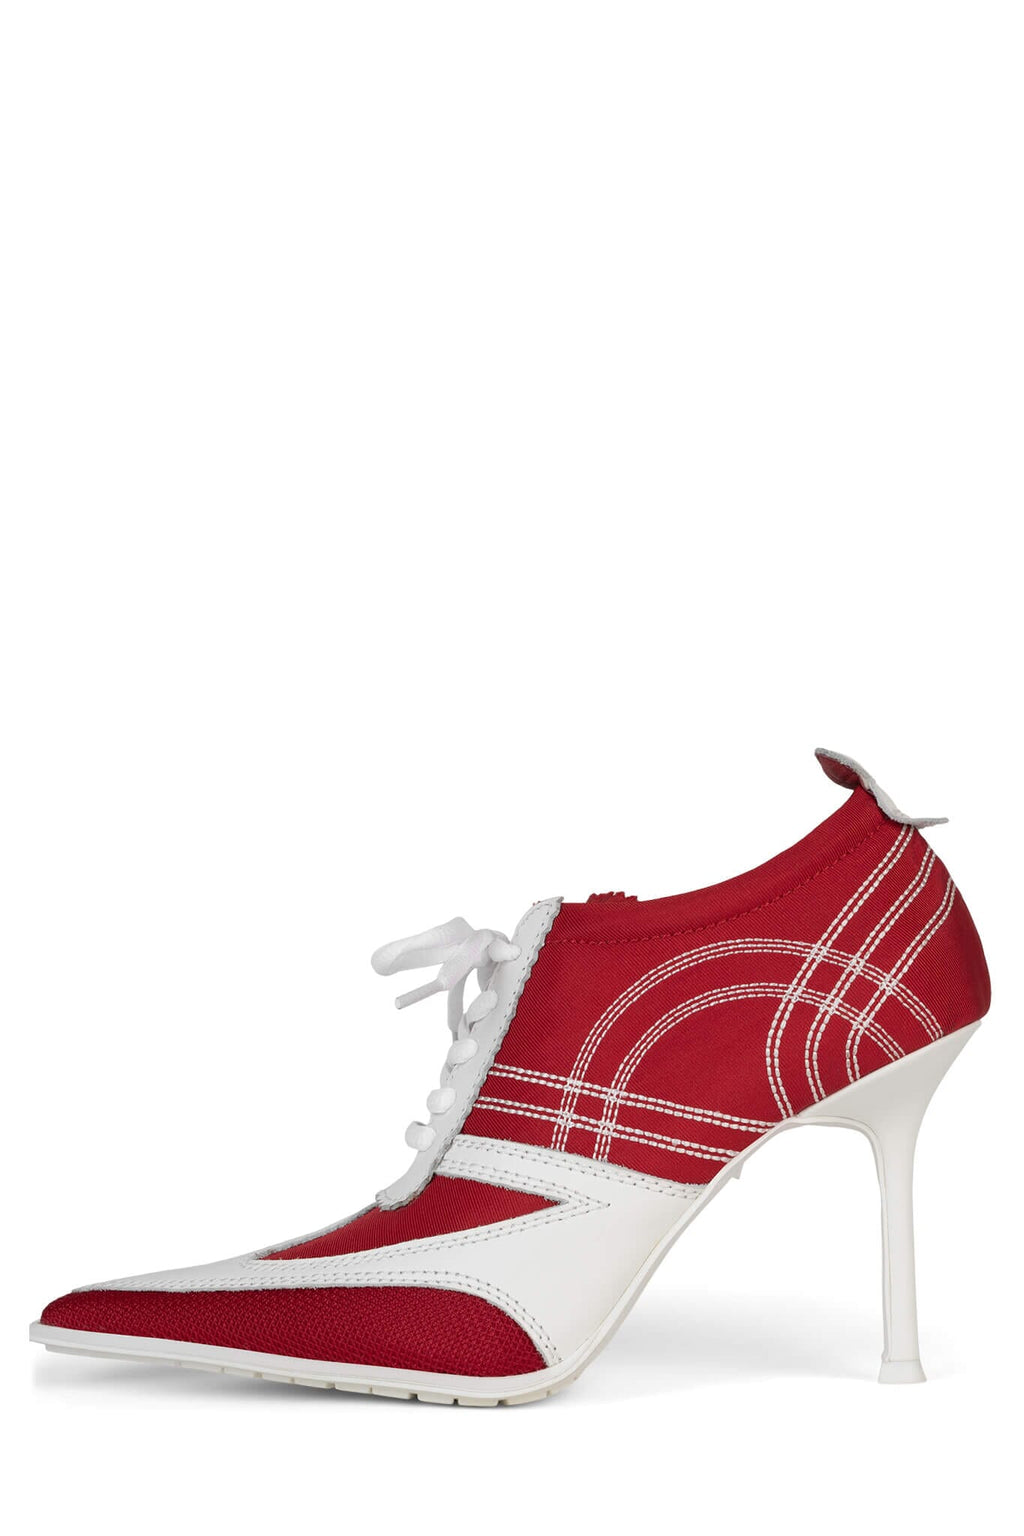 Buy Michelle White Heels by Designer House of Vian Online at Ogaan.com